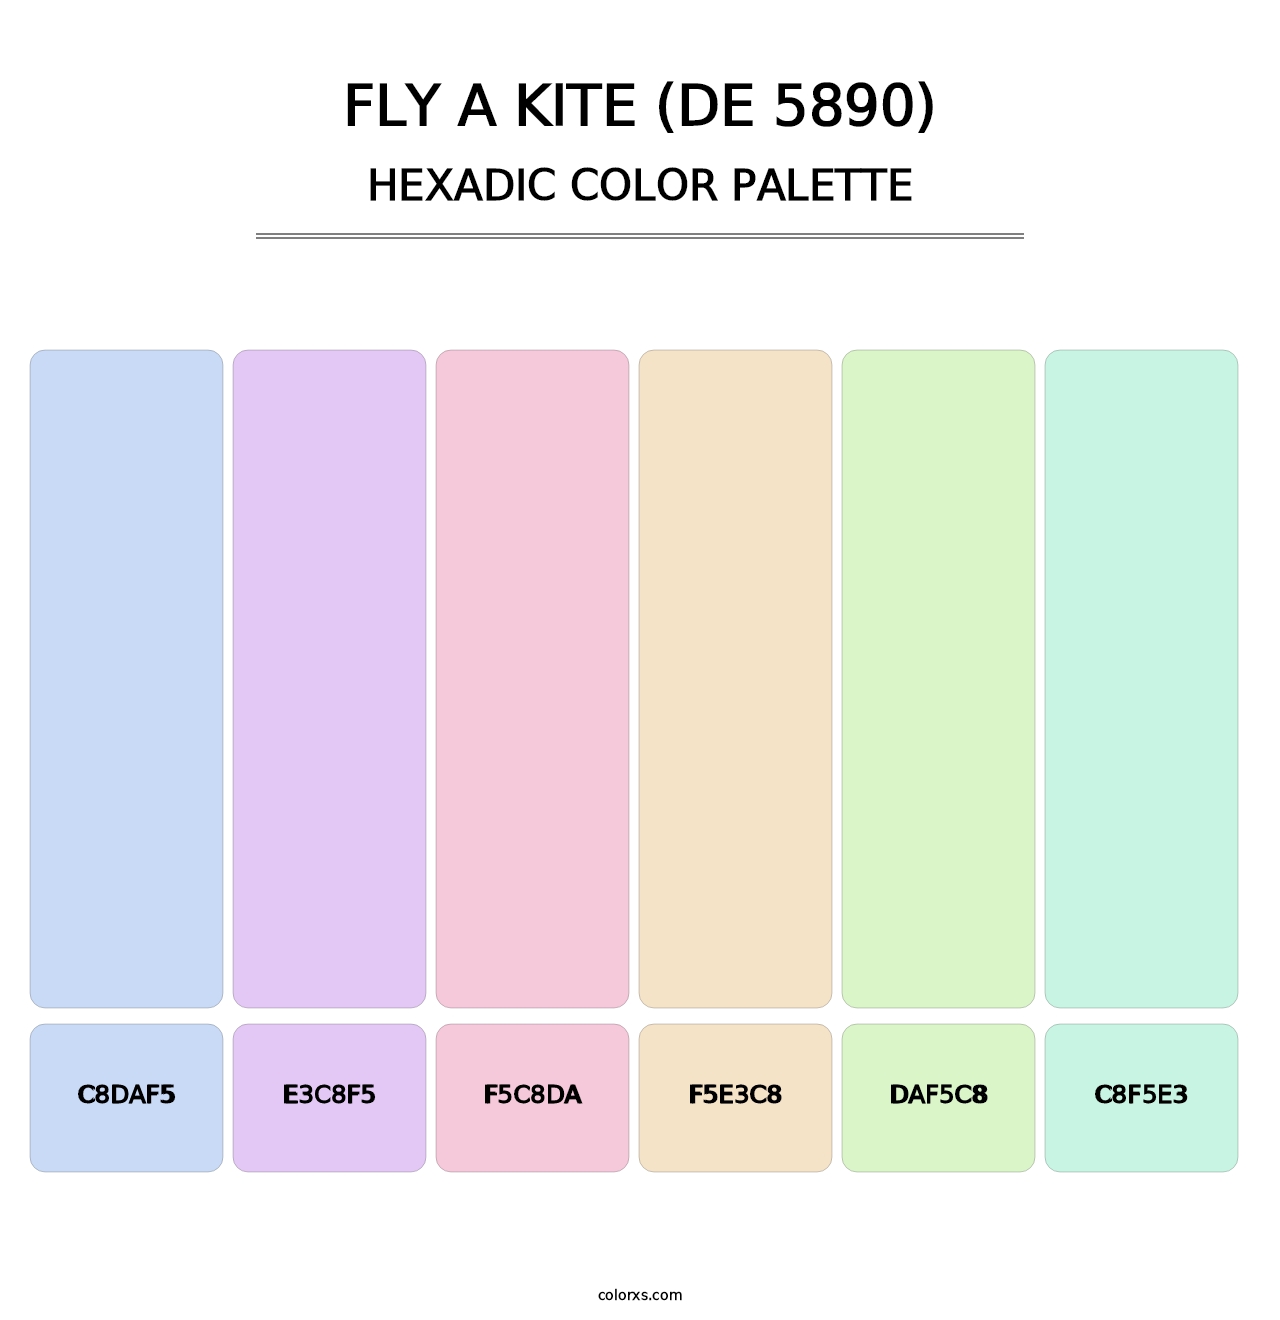 Fly a Kite (DE 5890) - Hexadic Color Palette